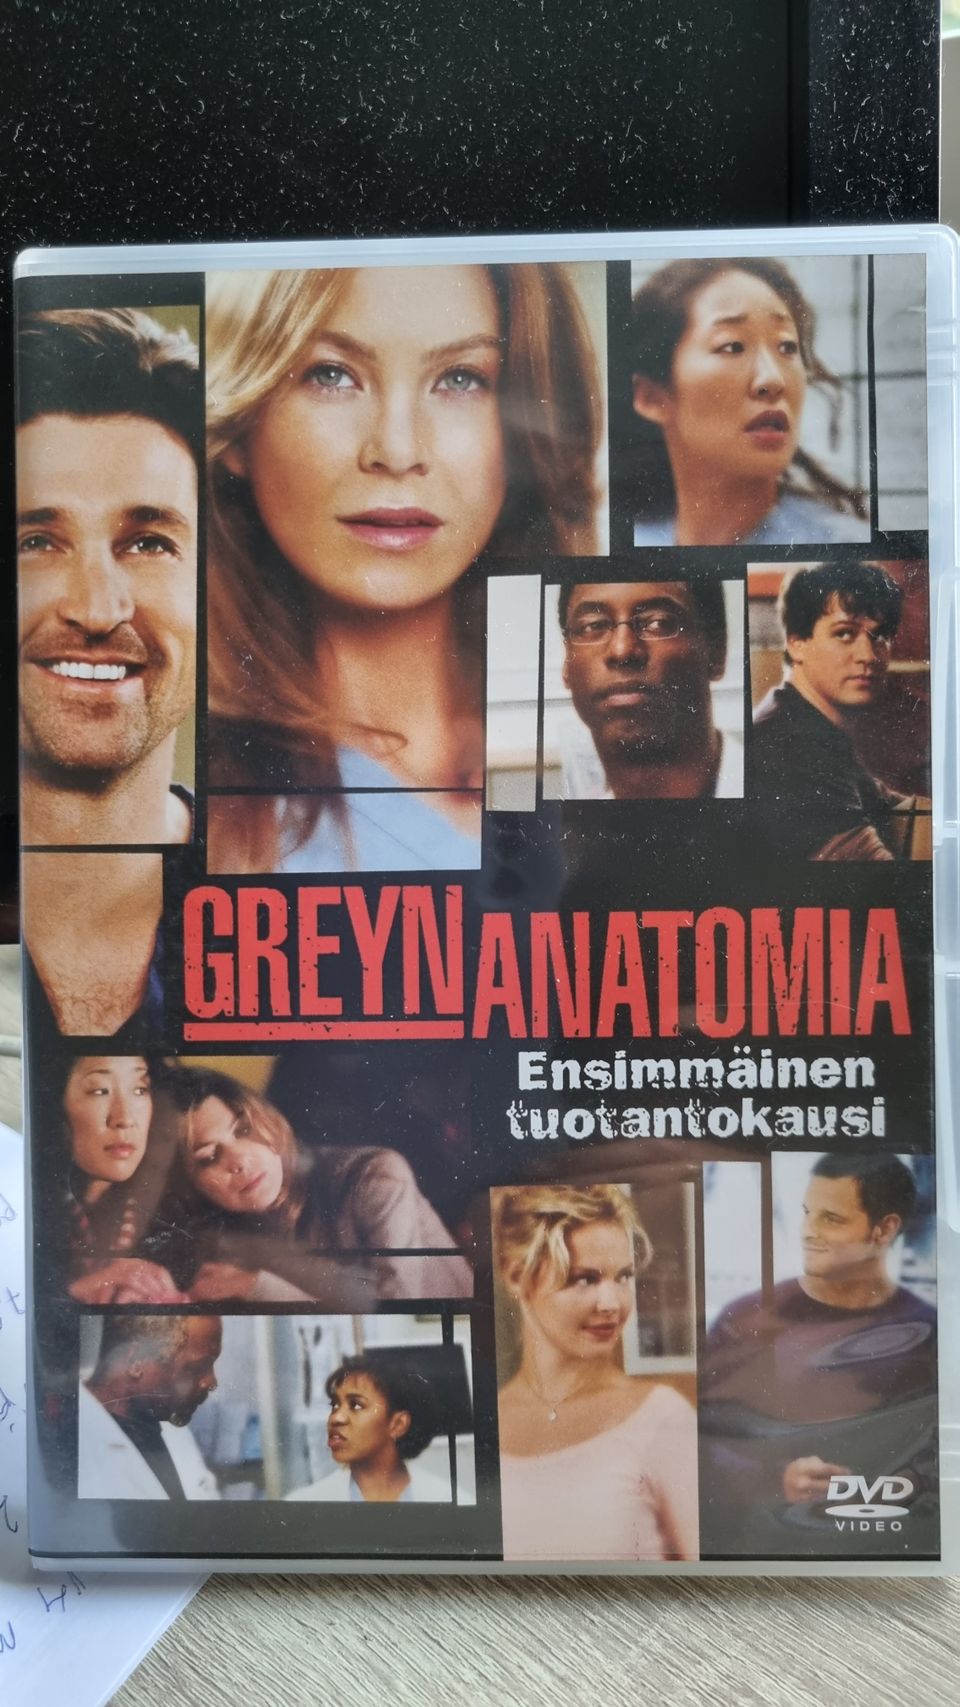 Greyn anatomia DVD